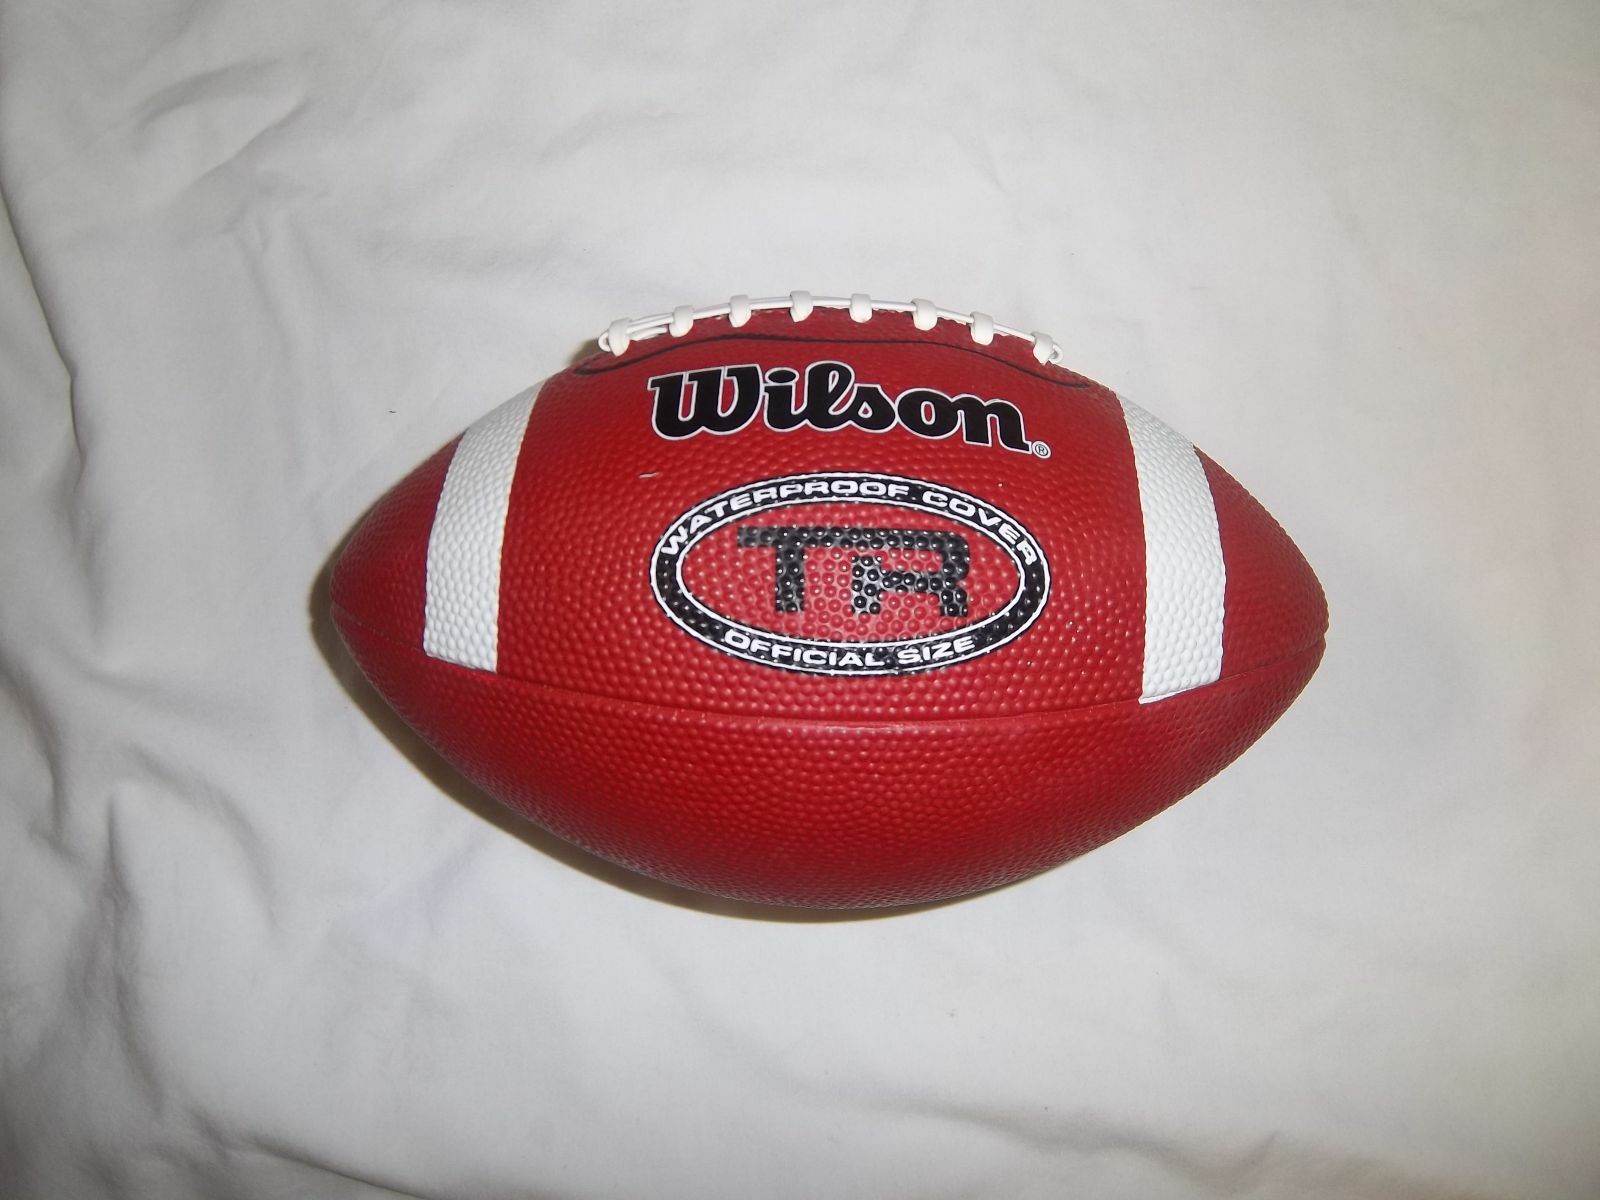 Wilson TR   Official Varsity Size Rubber Football